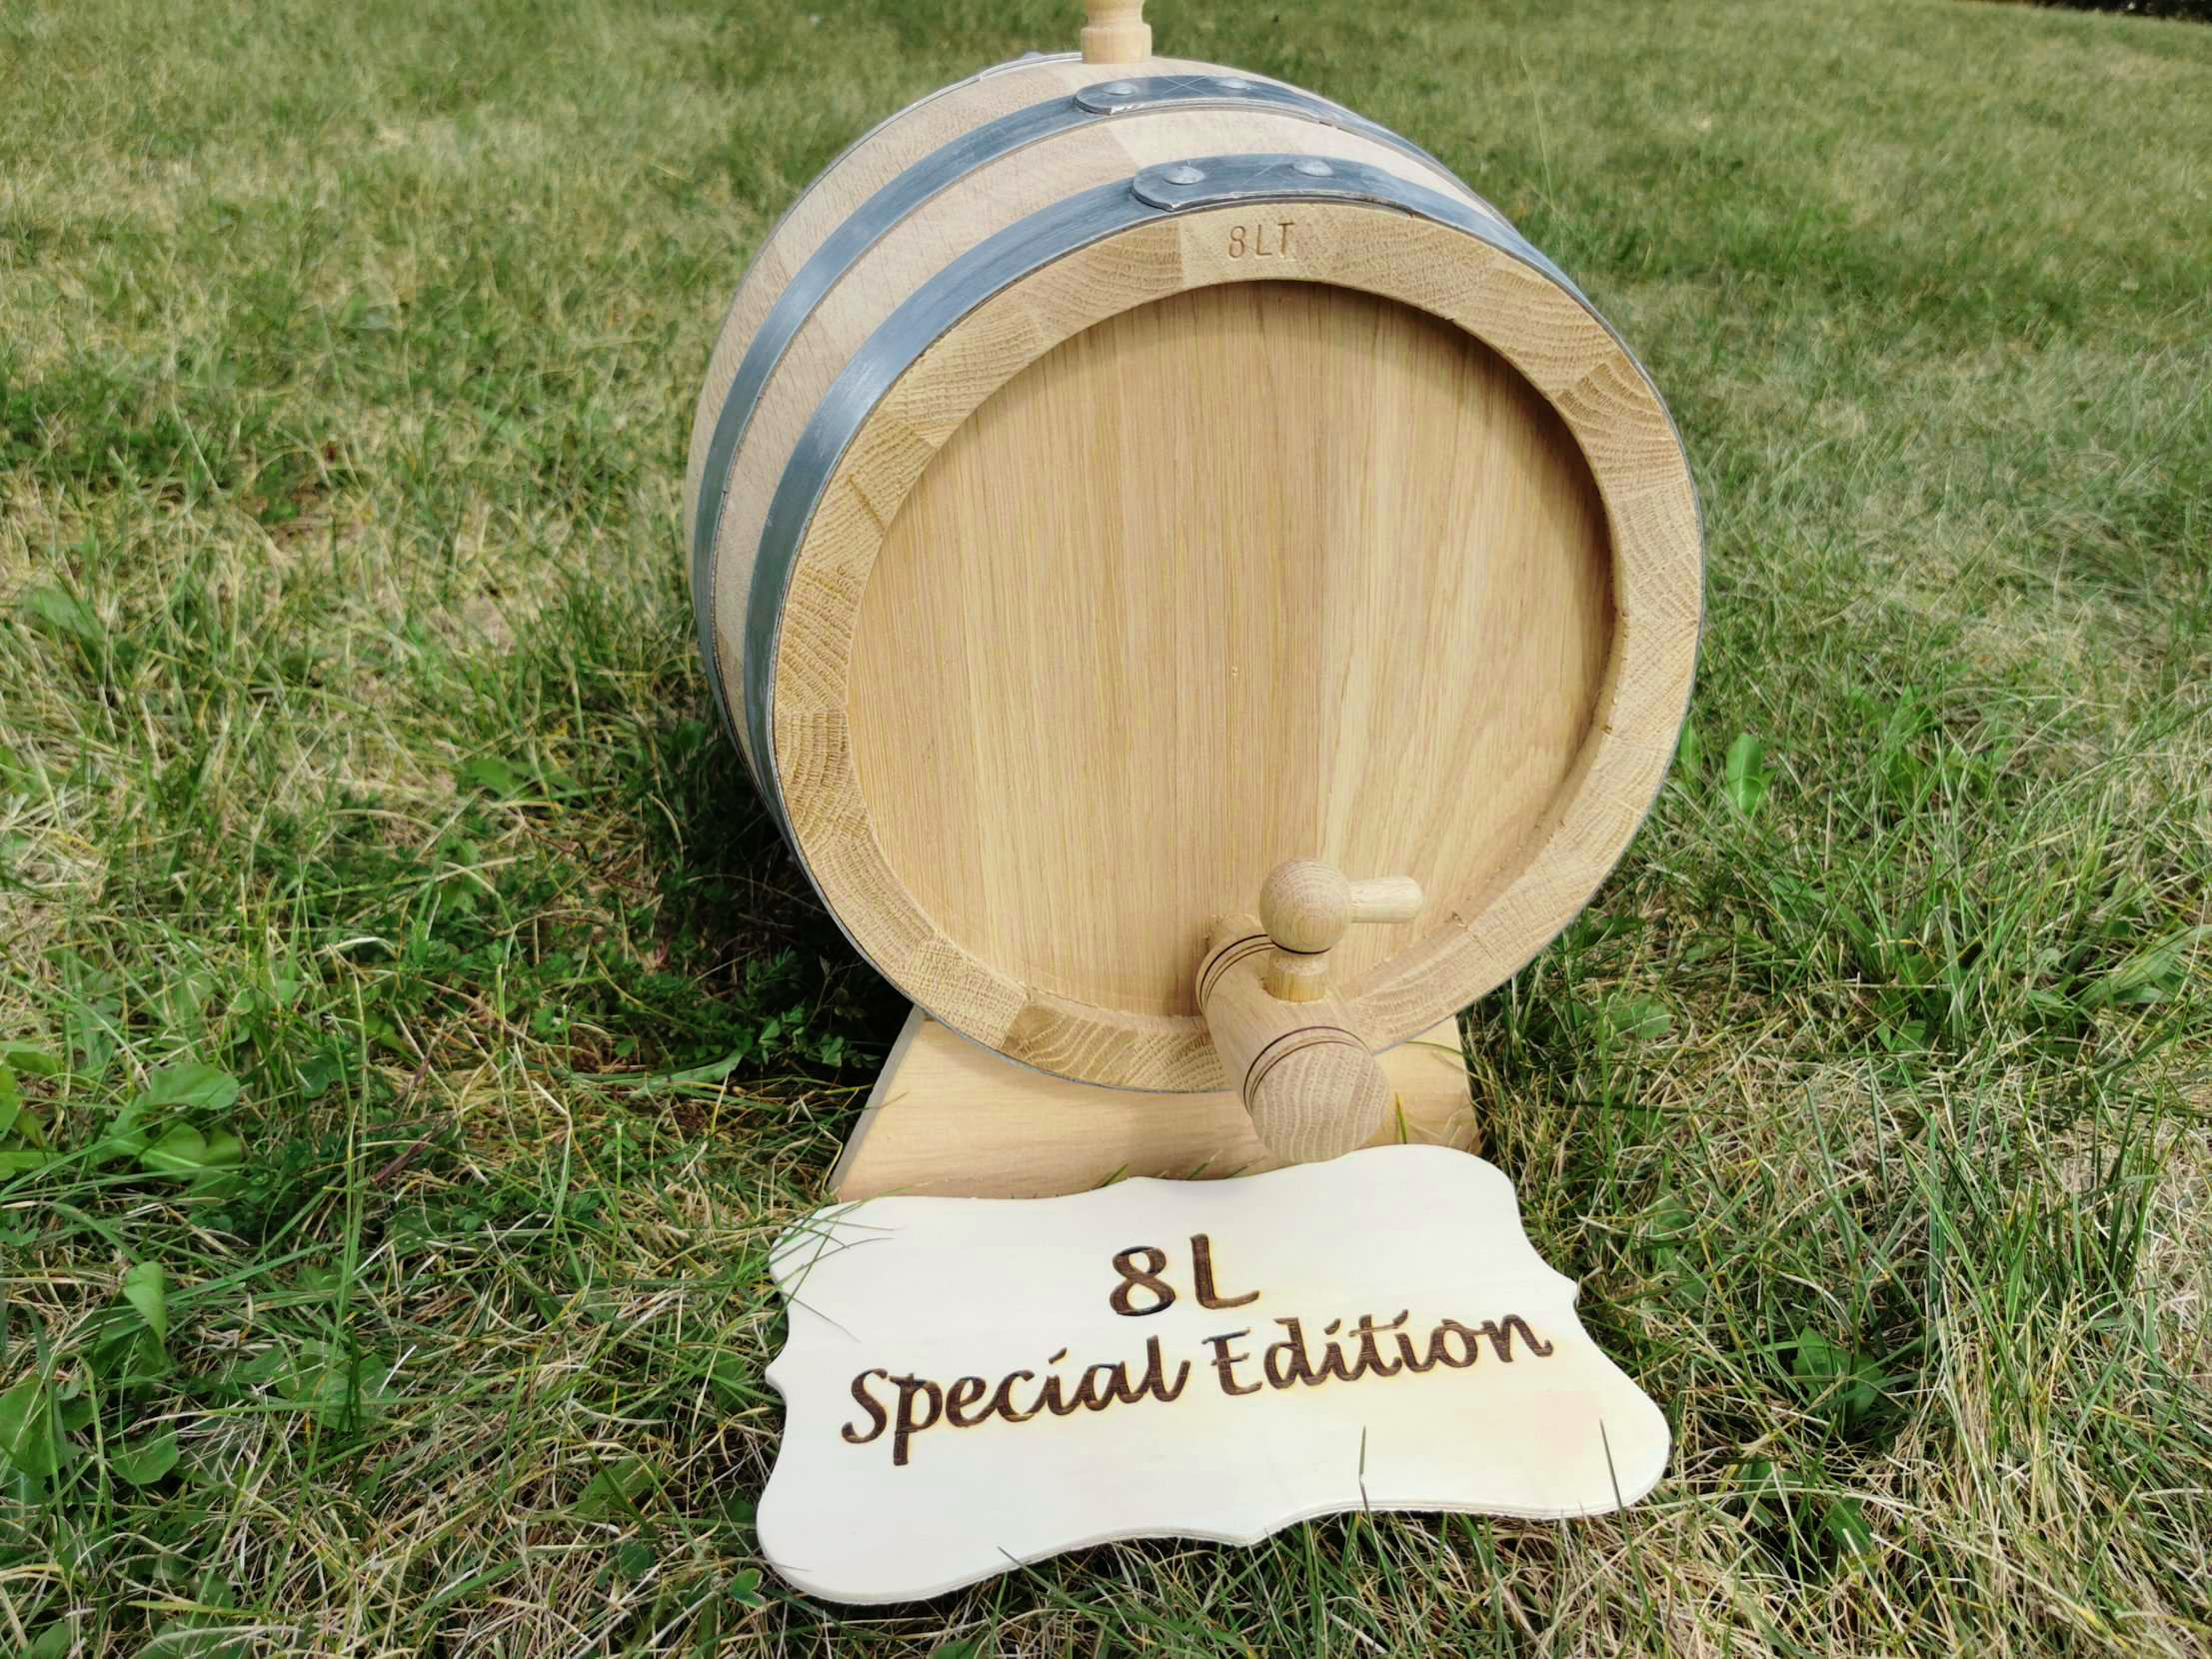 Oak barrel 8 liter special edition